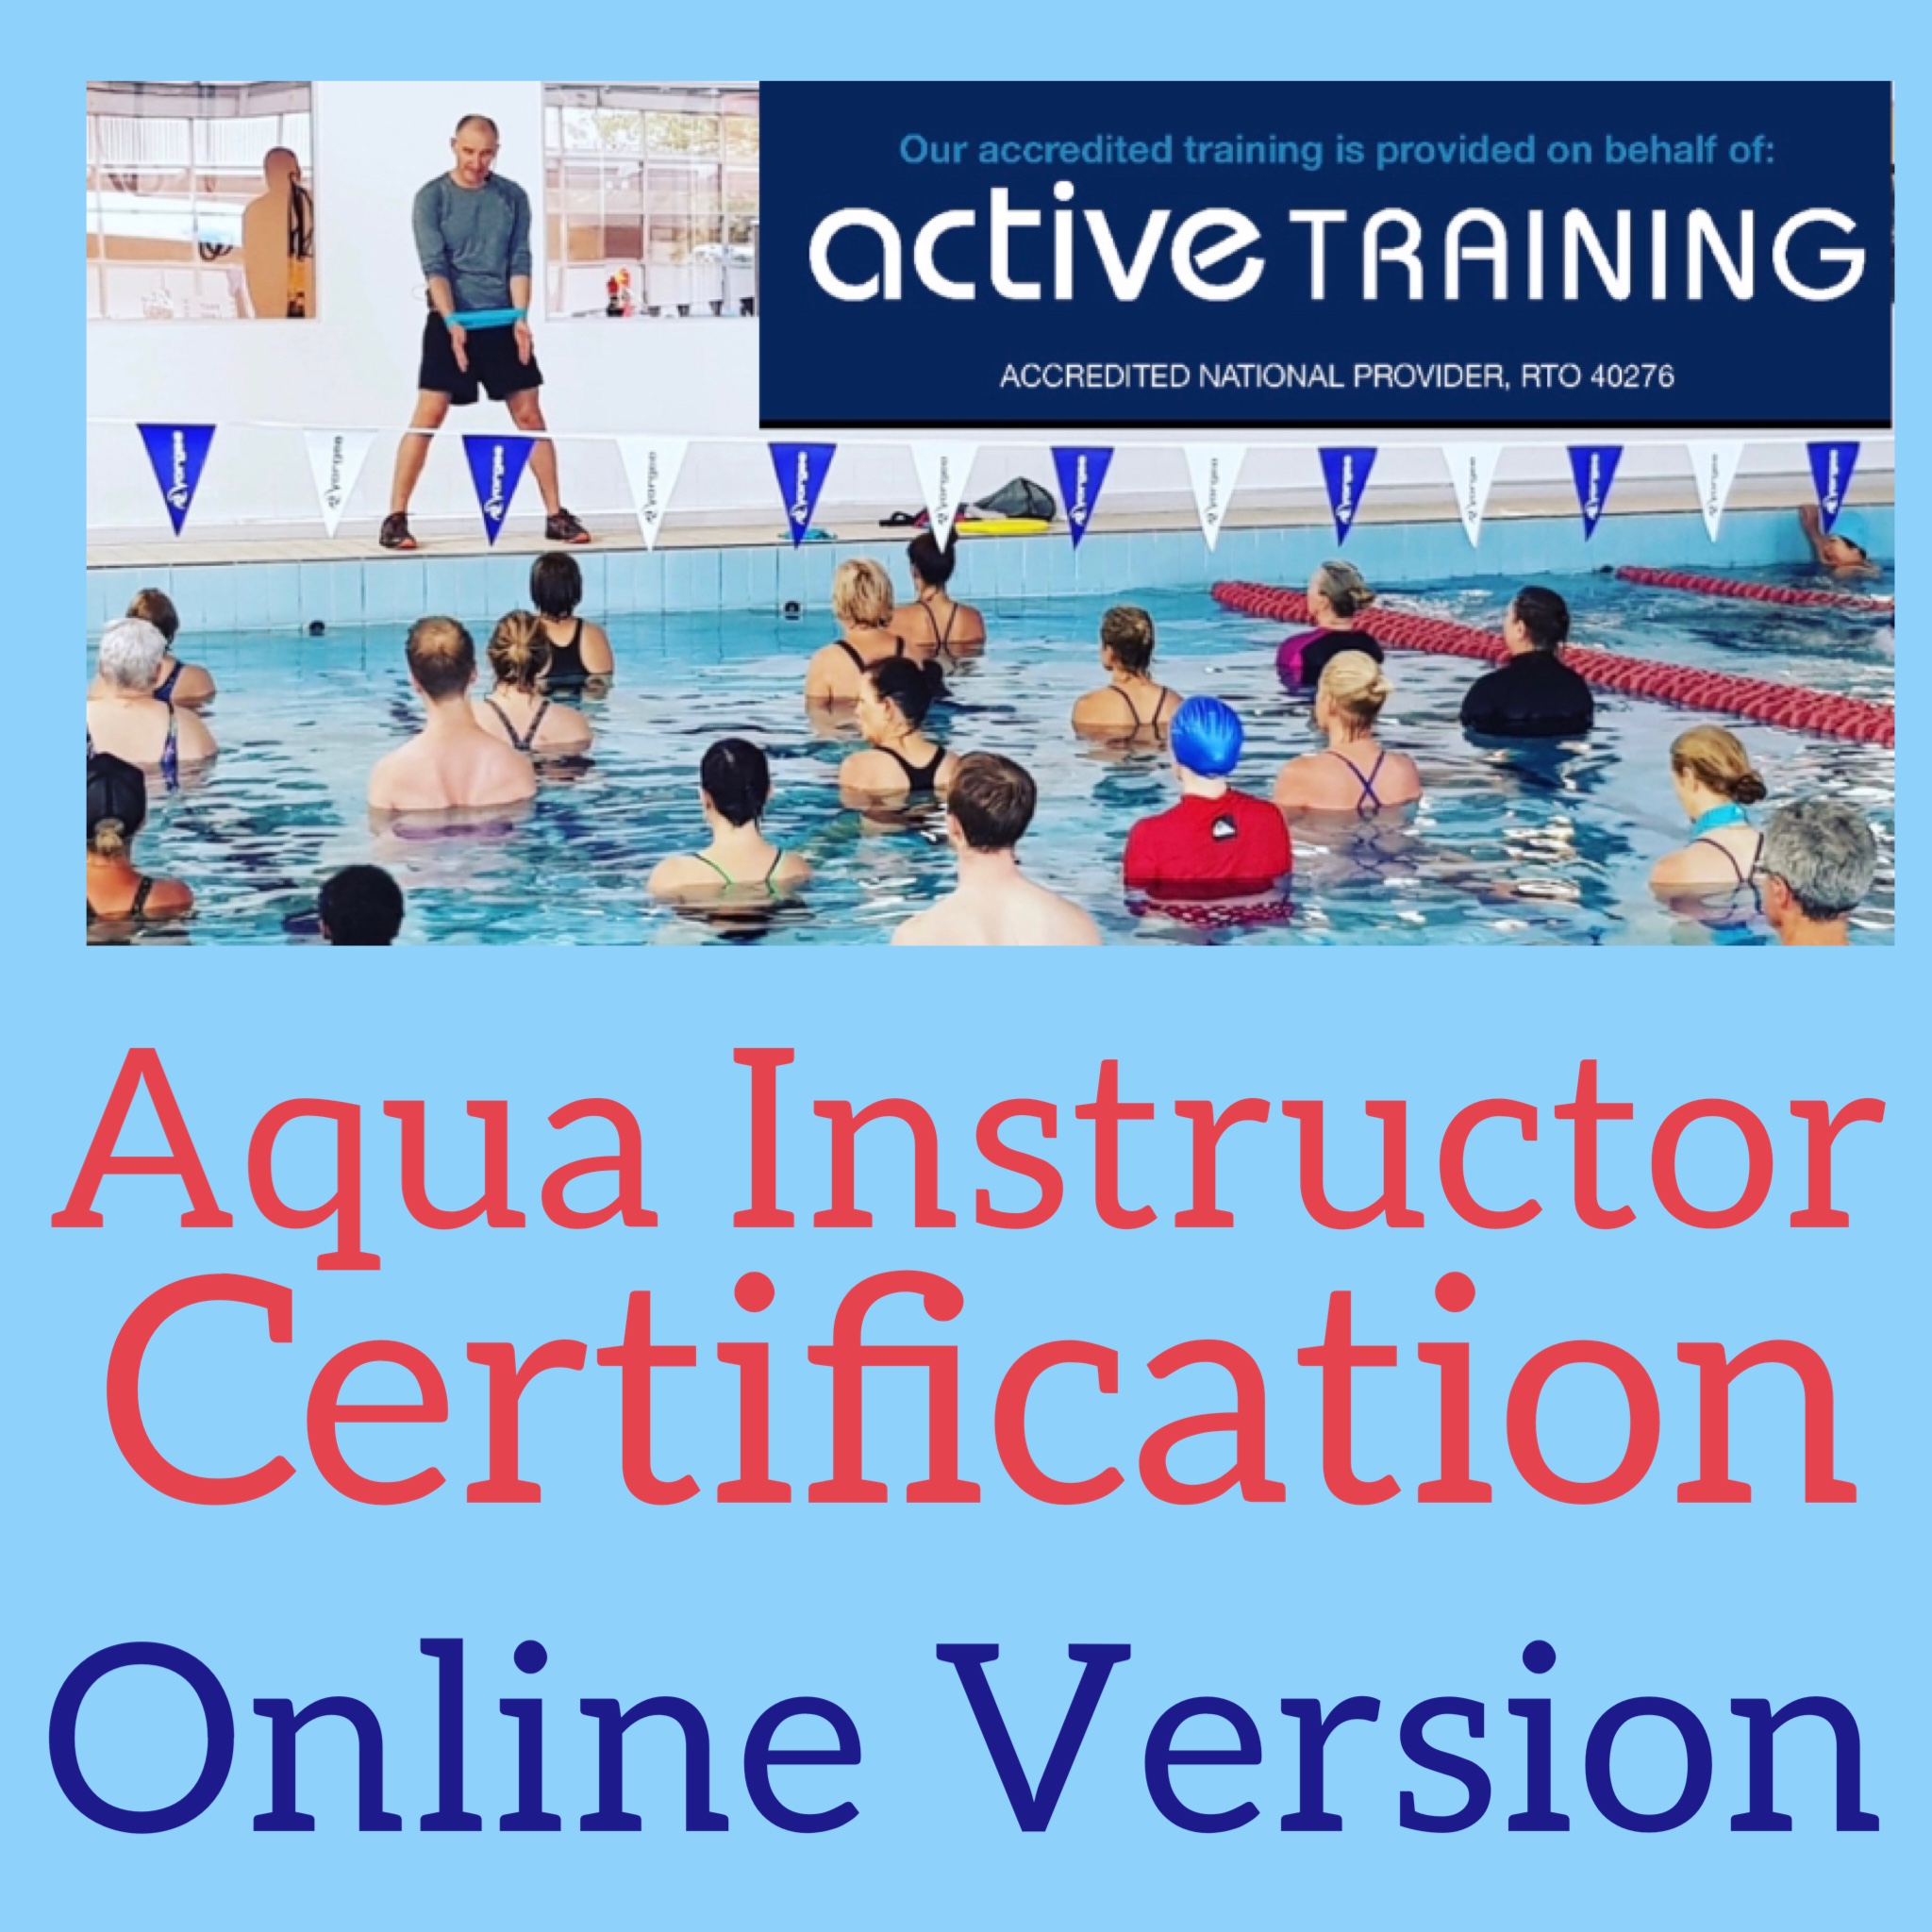 Aqua Instructor Certification - Online